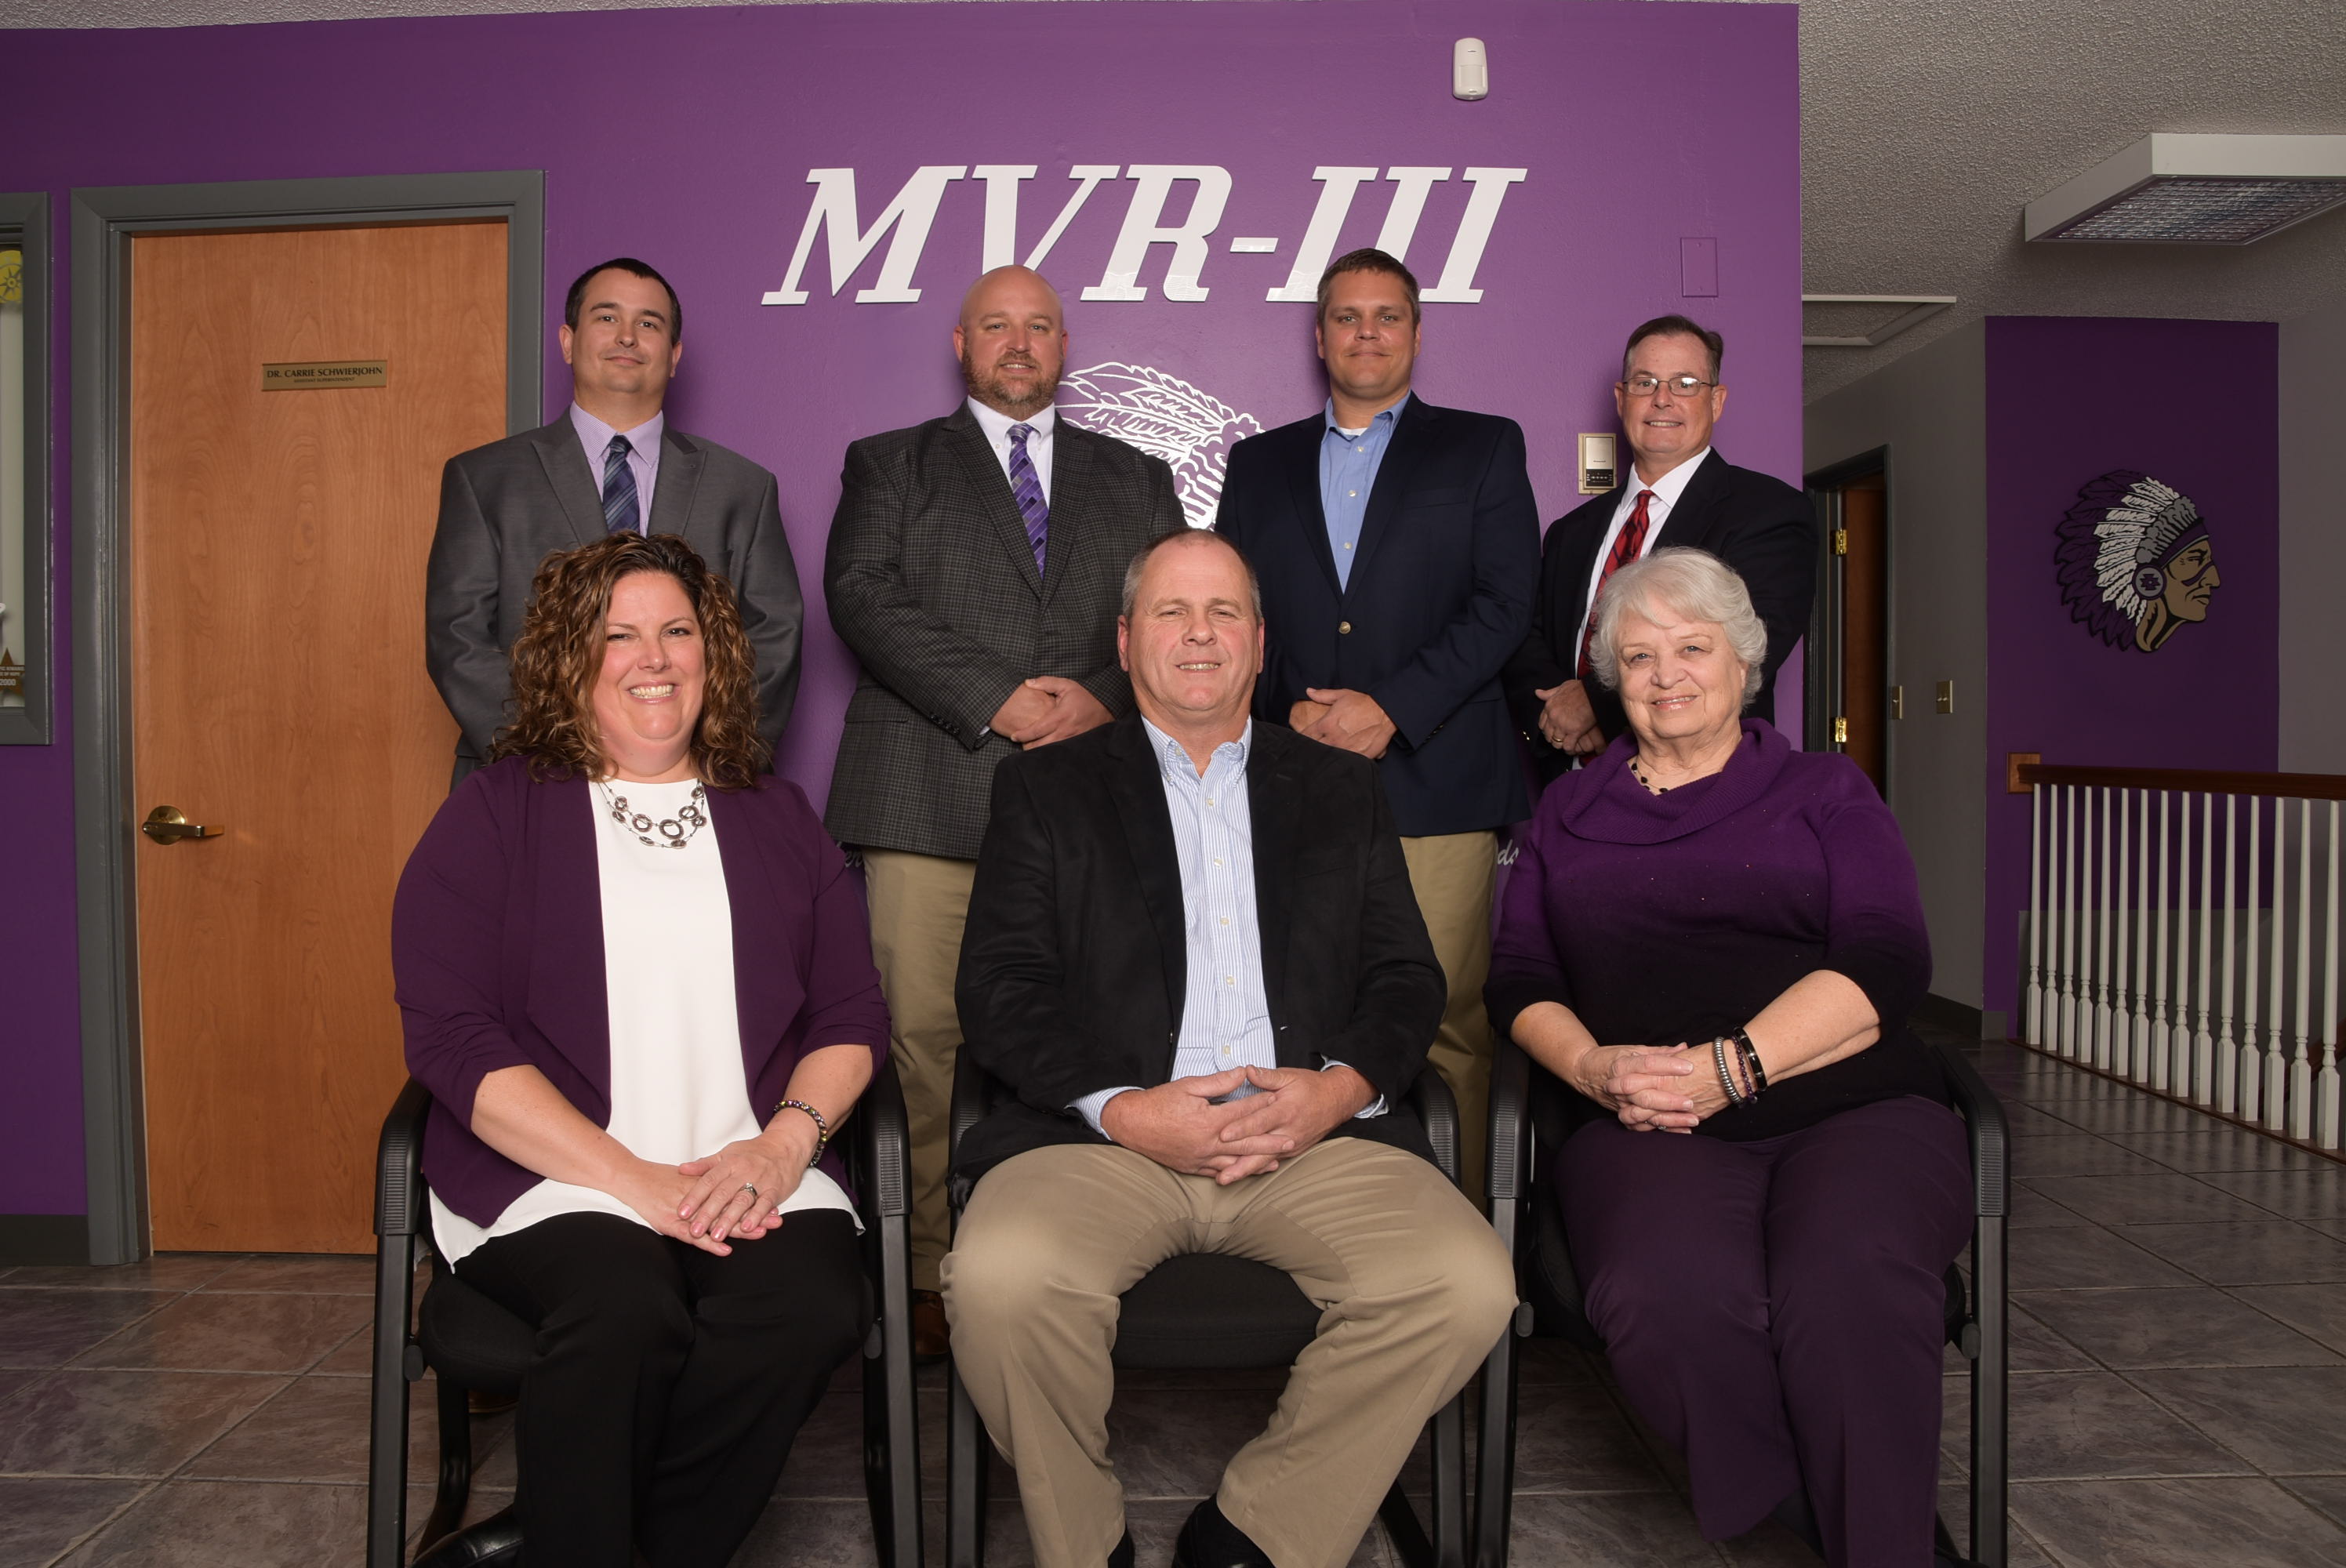 MVR-III Board of Education